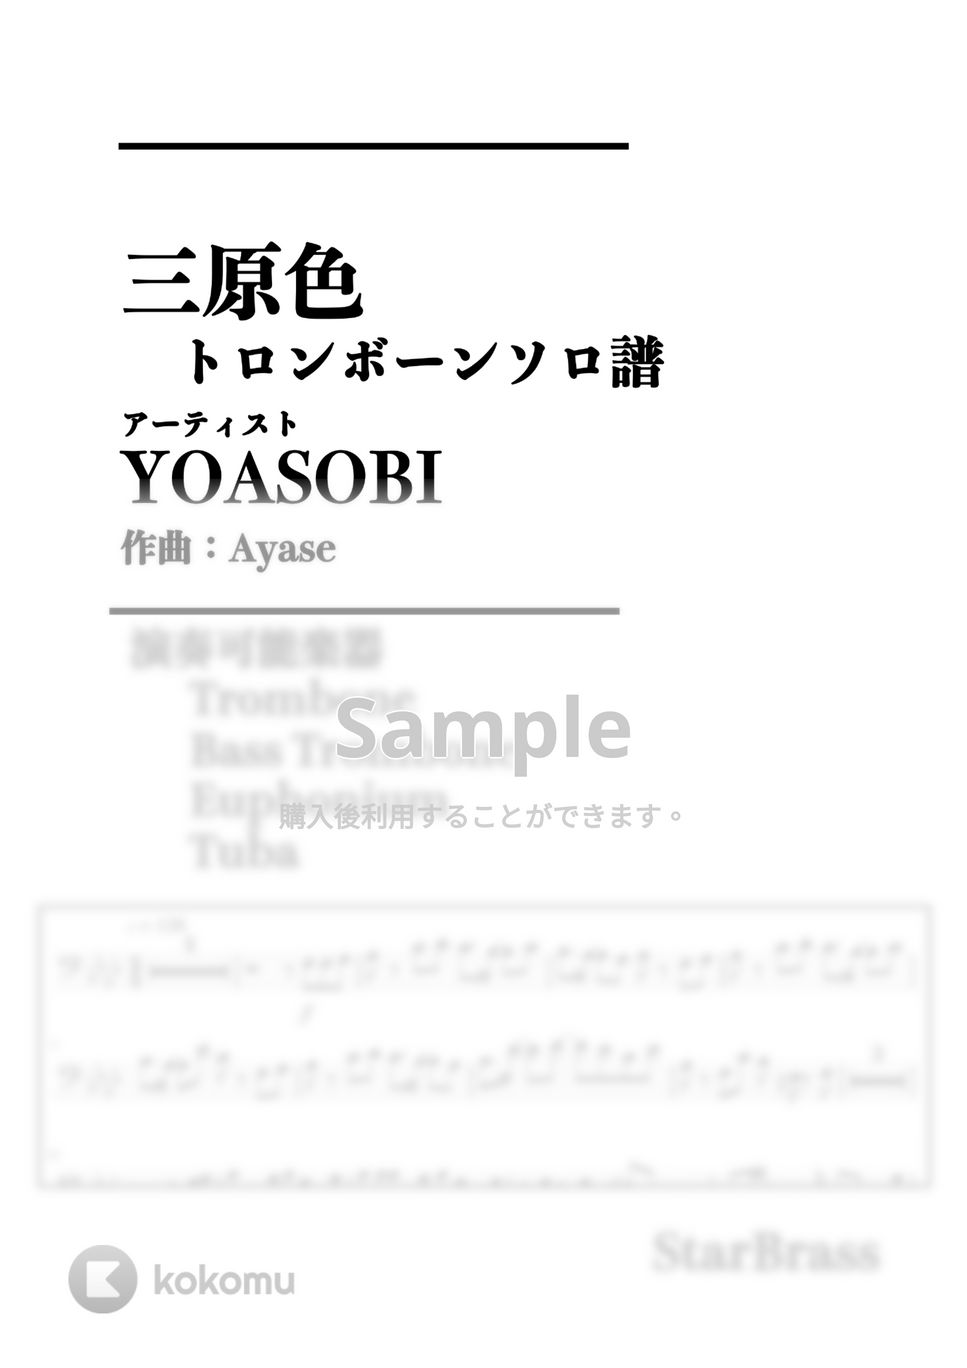 YOASOBI - 三原色 (-Trombone Solo- 原キー) by Creampuff